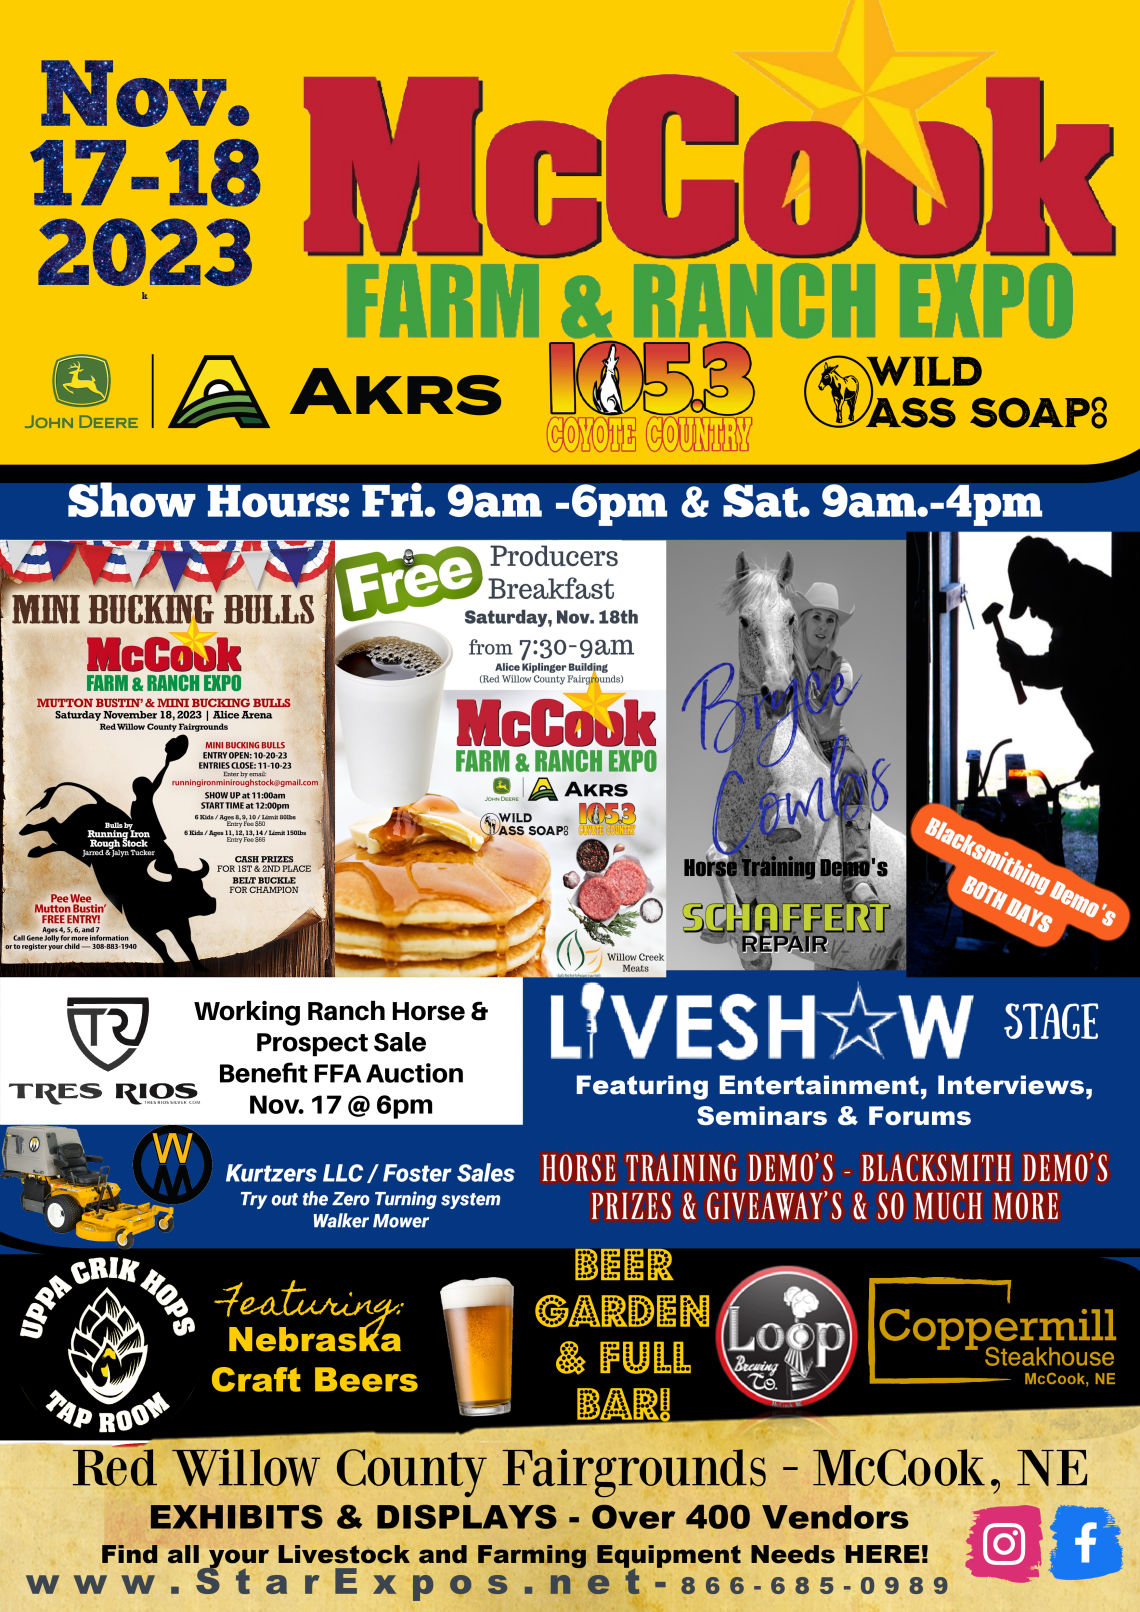 McCook Farm, Ranch & Hemp Expo Schedule